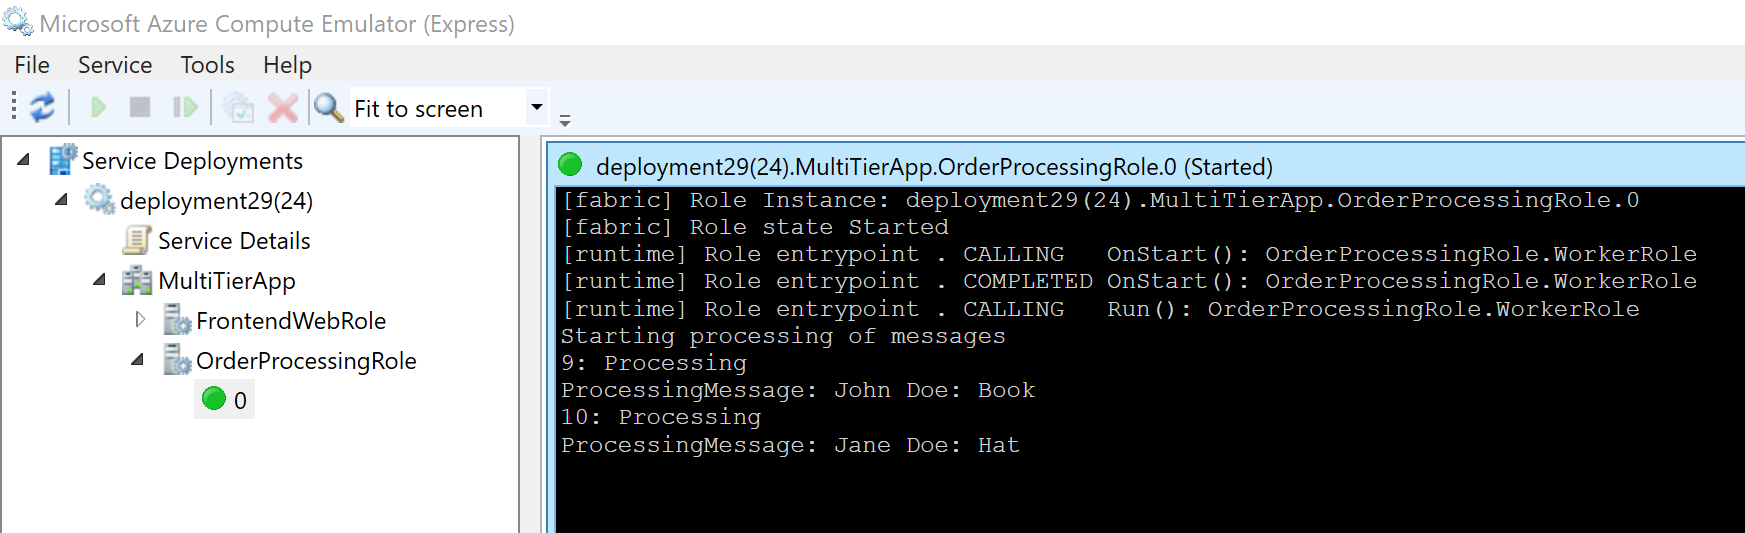 Screenshot of the Microsoft Azure Compute Emulator (Express) dialog box.